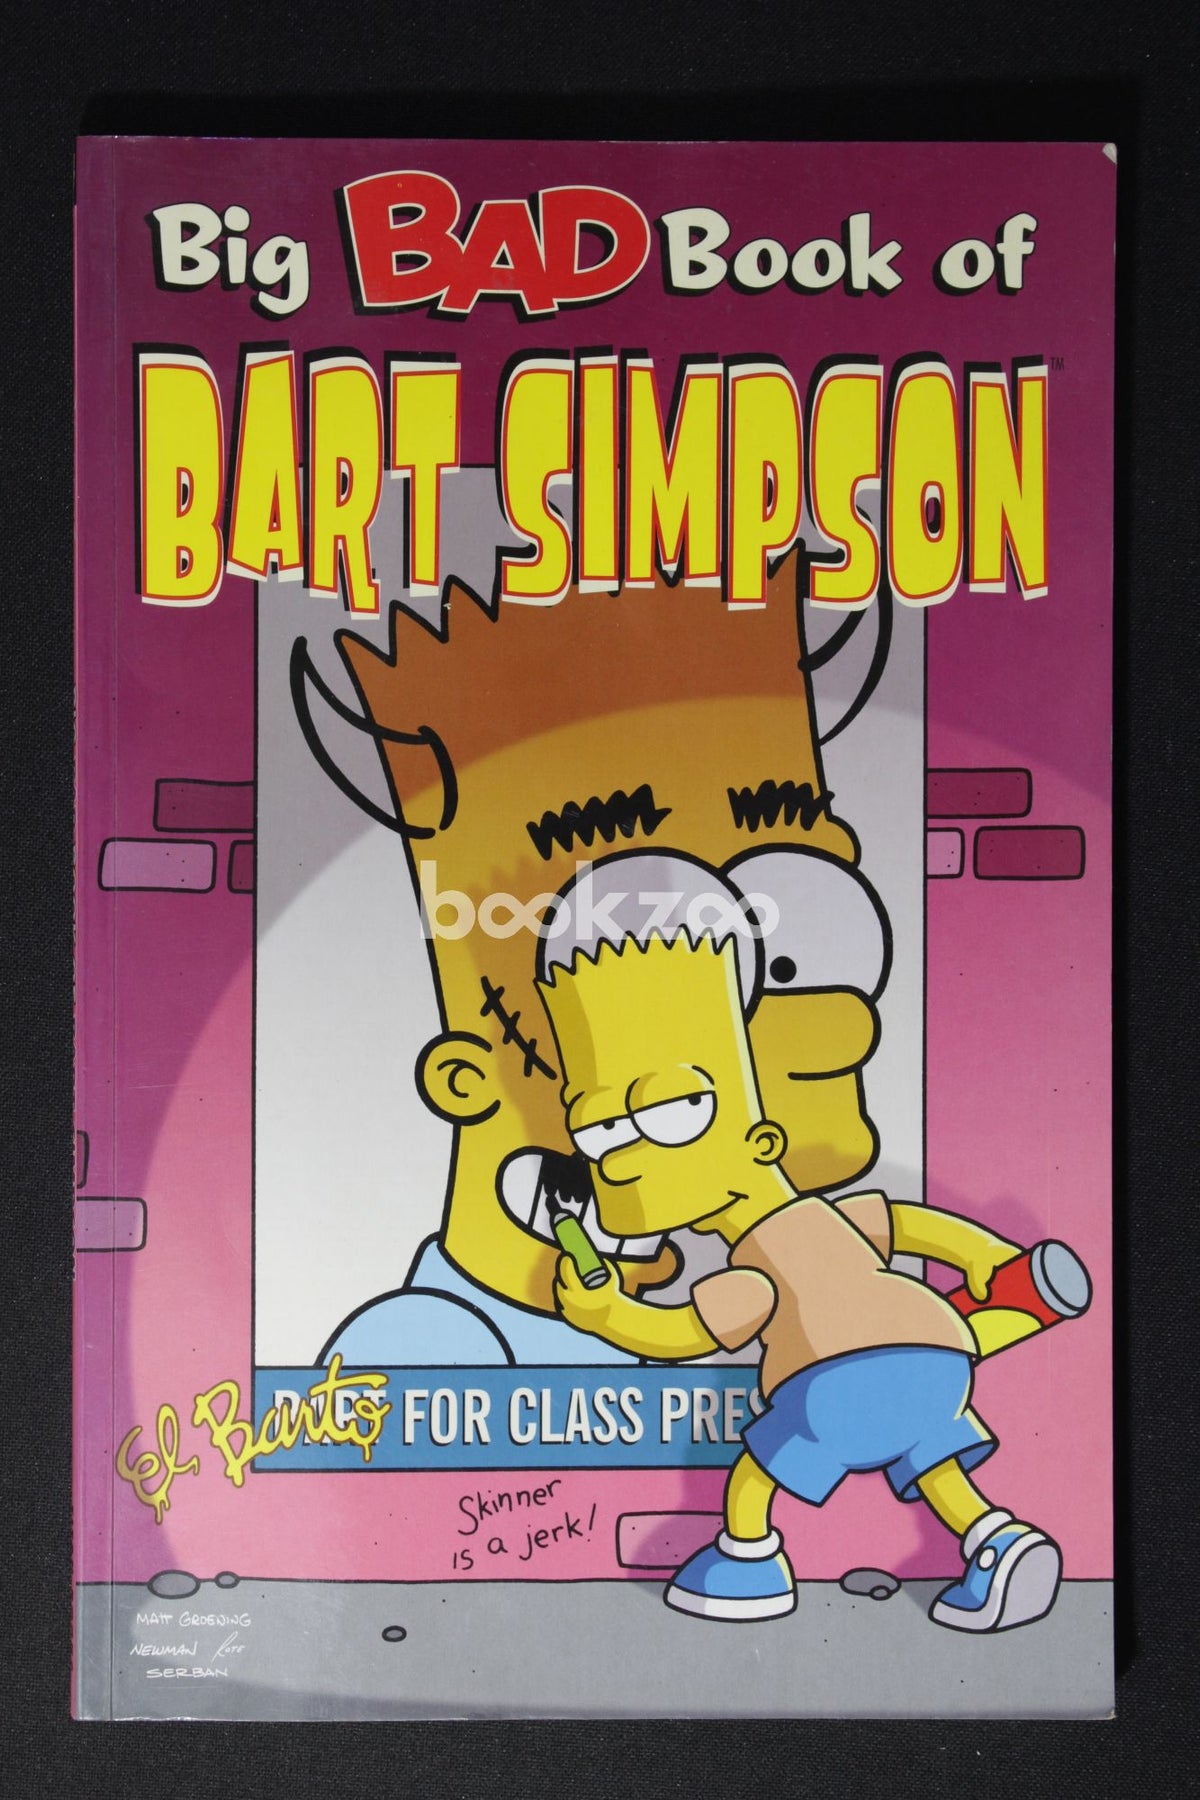 Matt　Book　Buy　Simpson　at　Big　Groening　of　Bad　by　Bart　Online　bookstore　—